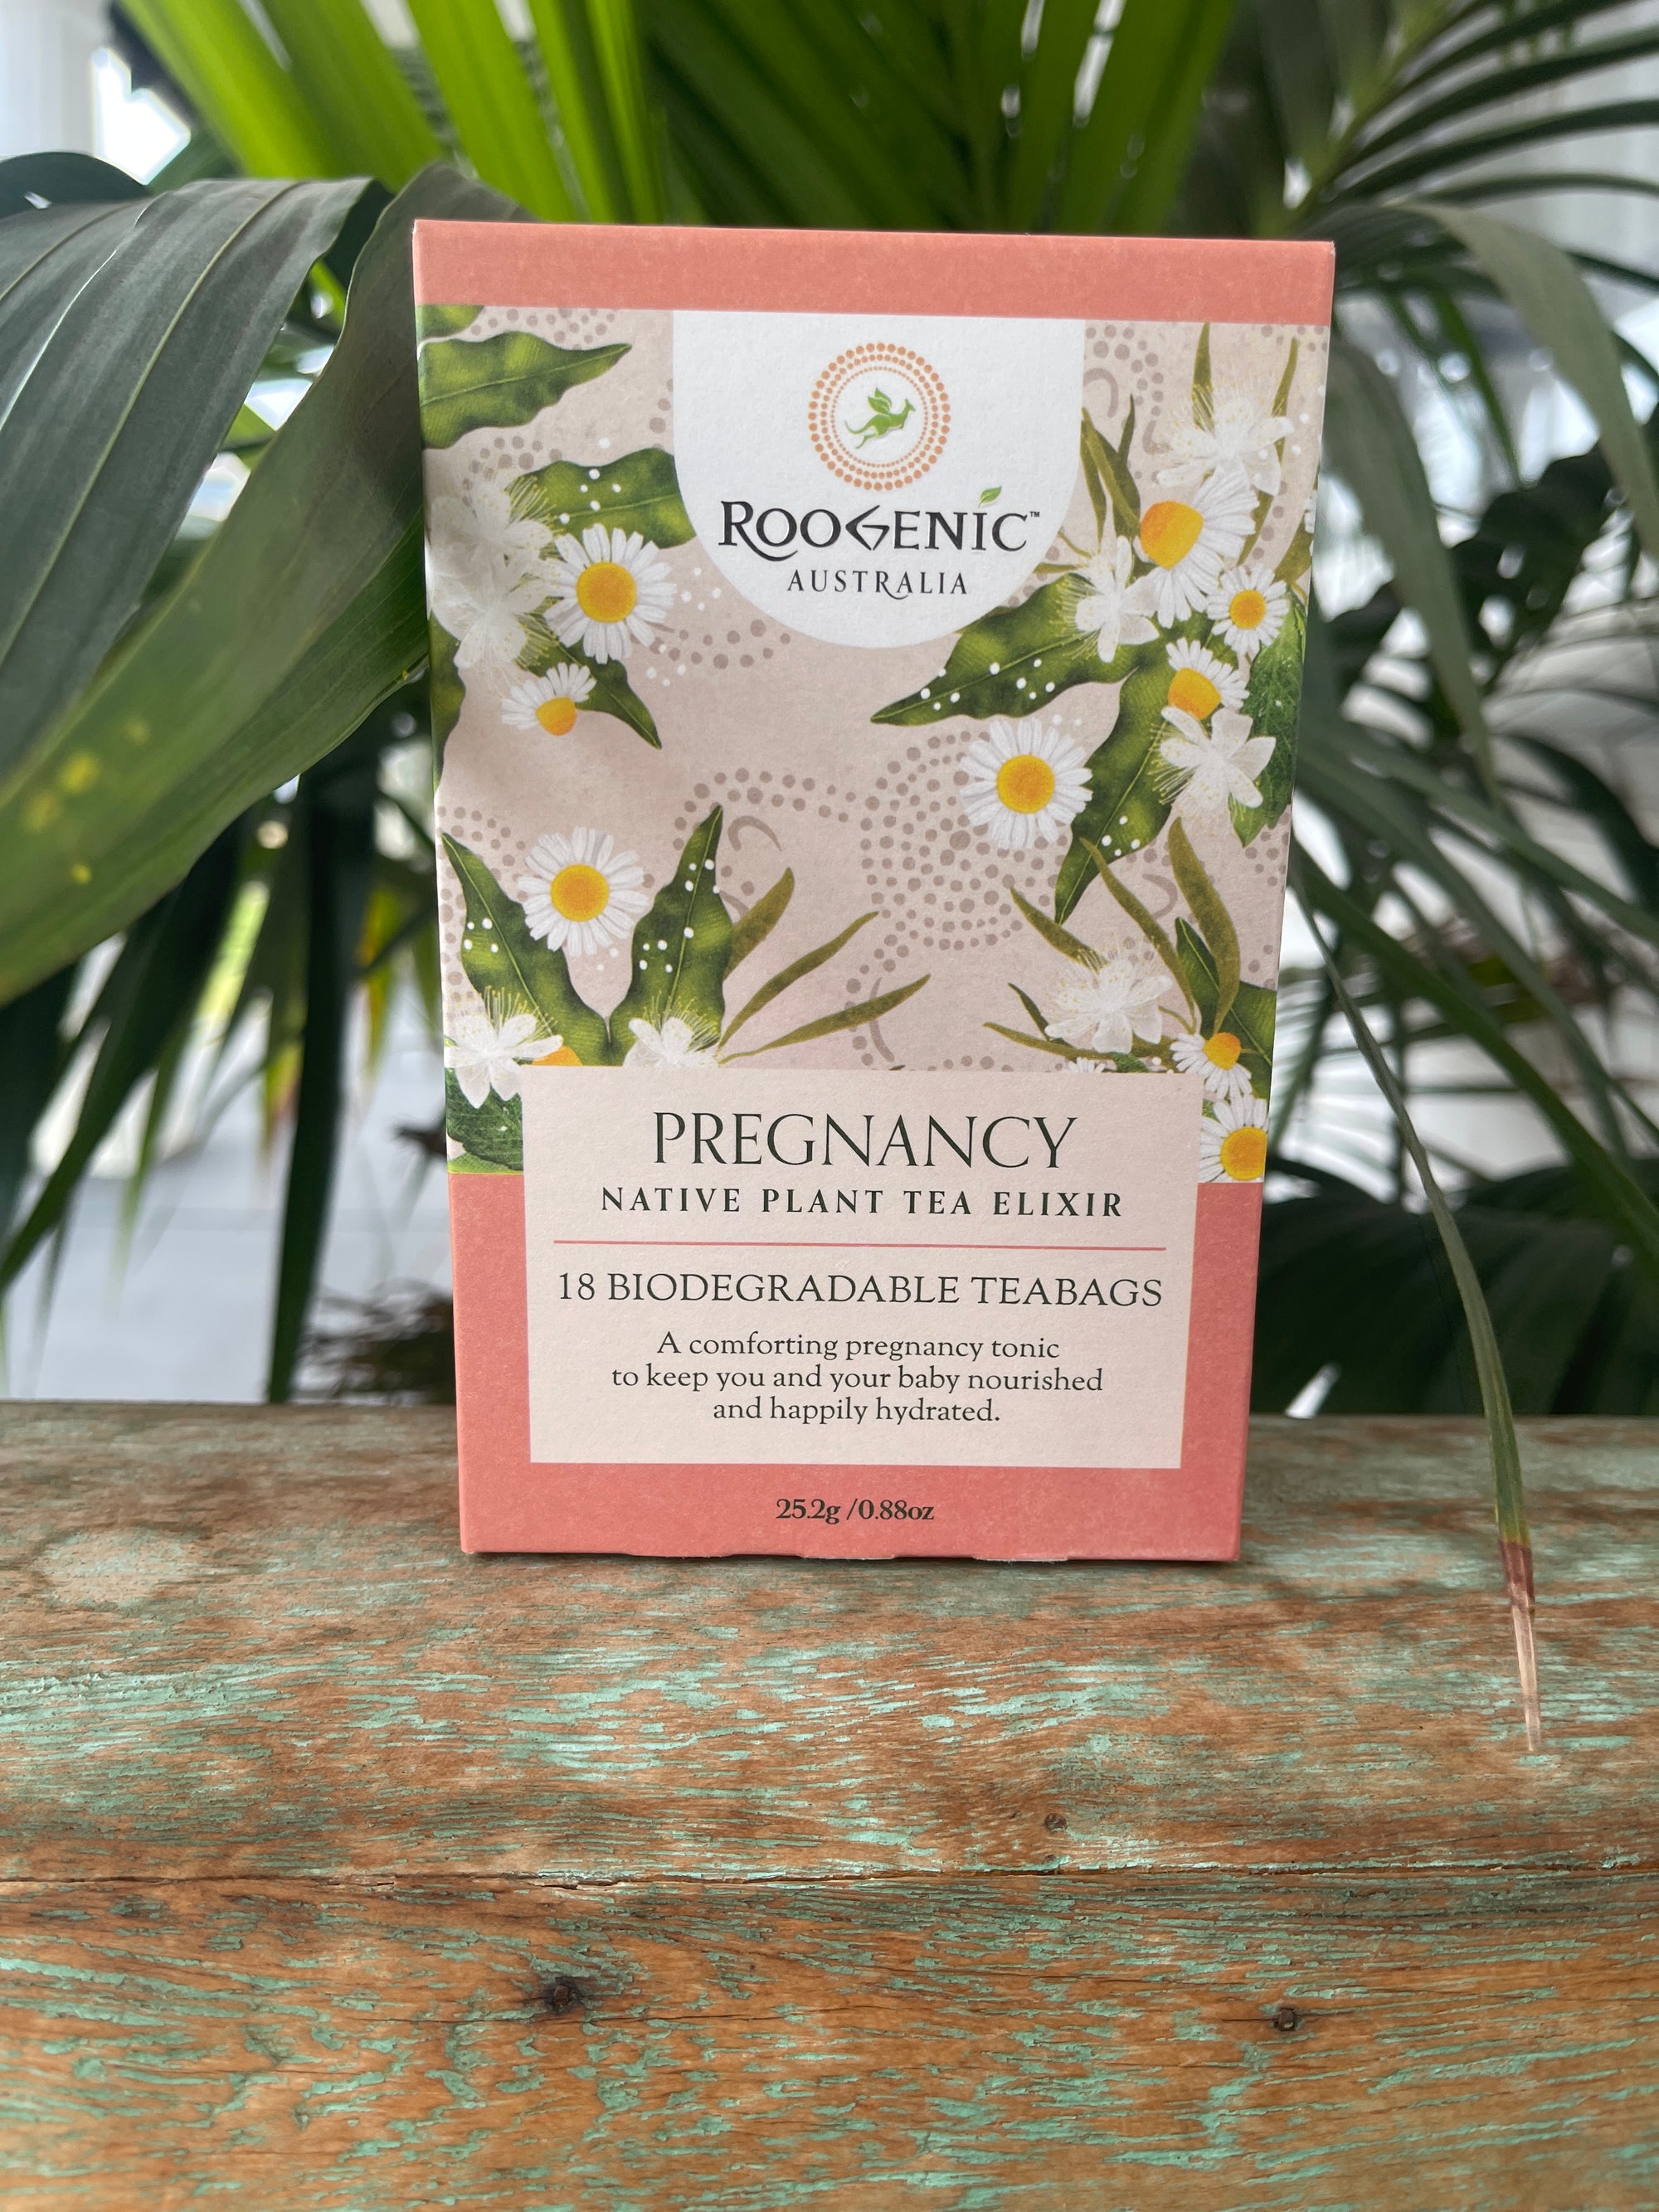 Roogenic Australia Pregnancy Native Plant Tea Elixir